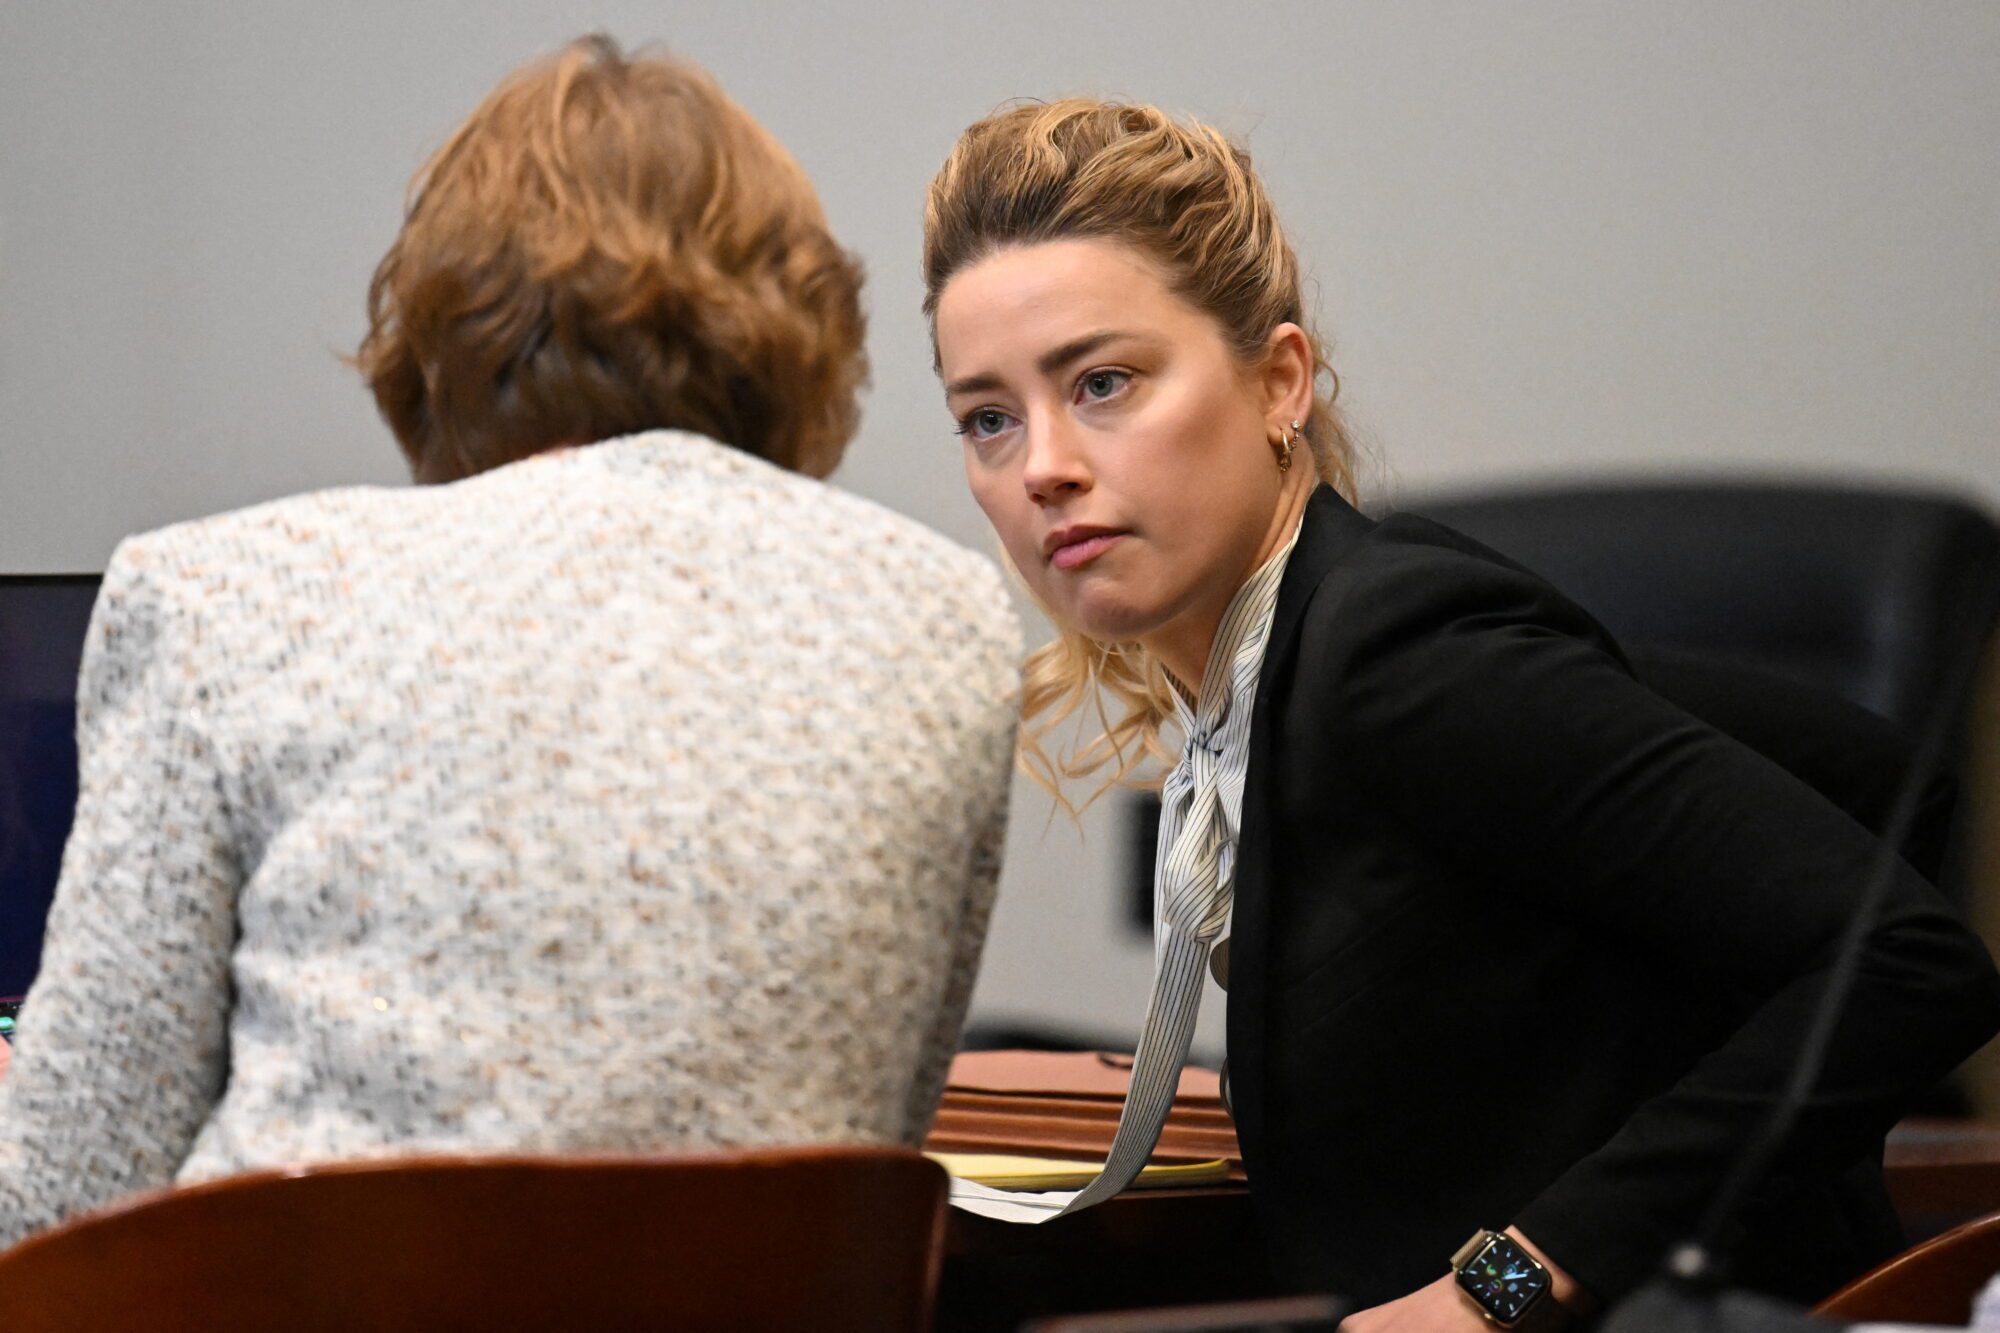 Johnny Depp defamation case against ex-wife Amber Heard continues in Fairfax, Virginia